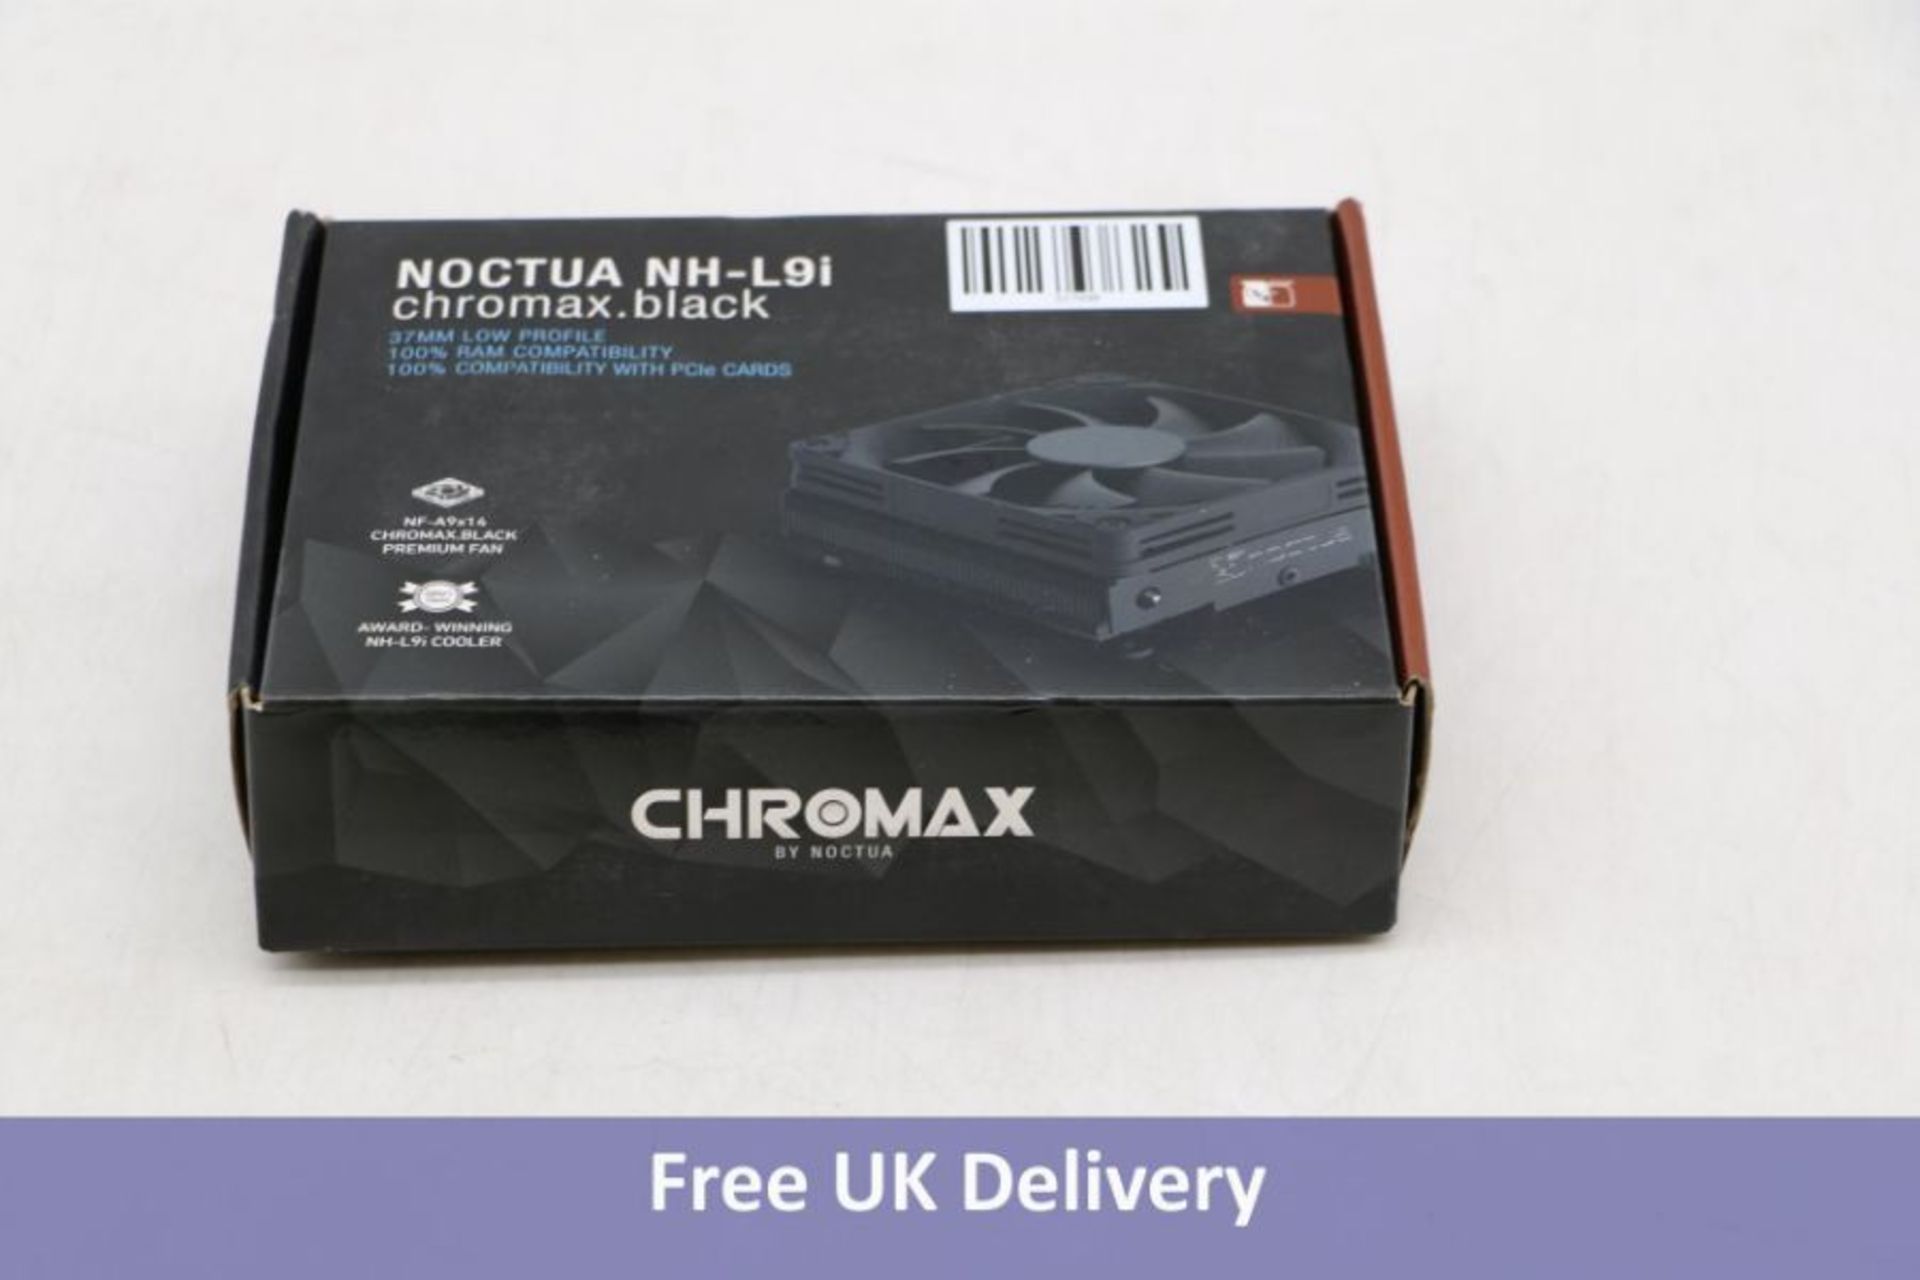 Noctua NH-L9i chromax.black Low Profile CPU Cooler, for Intel LGA115x